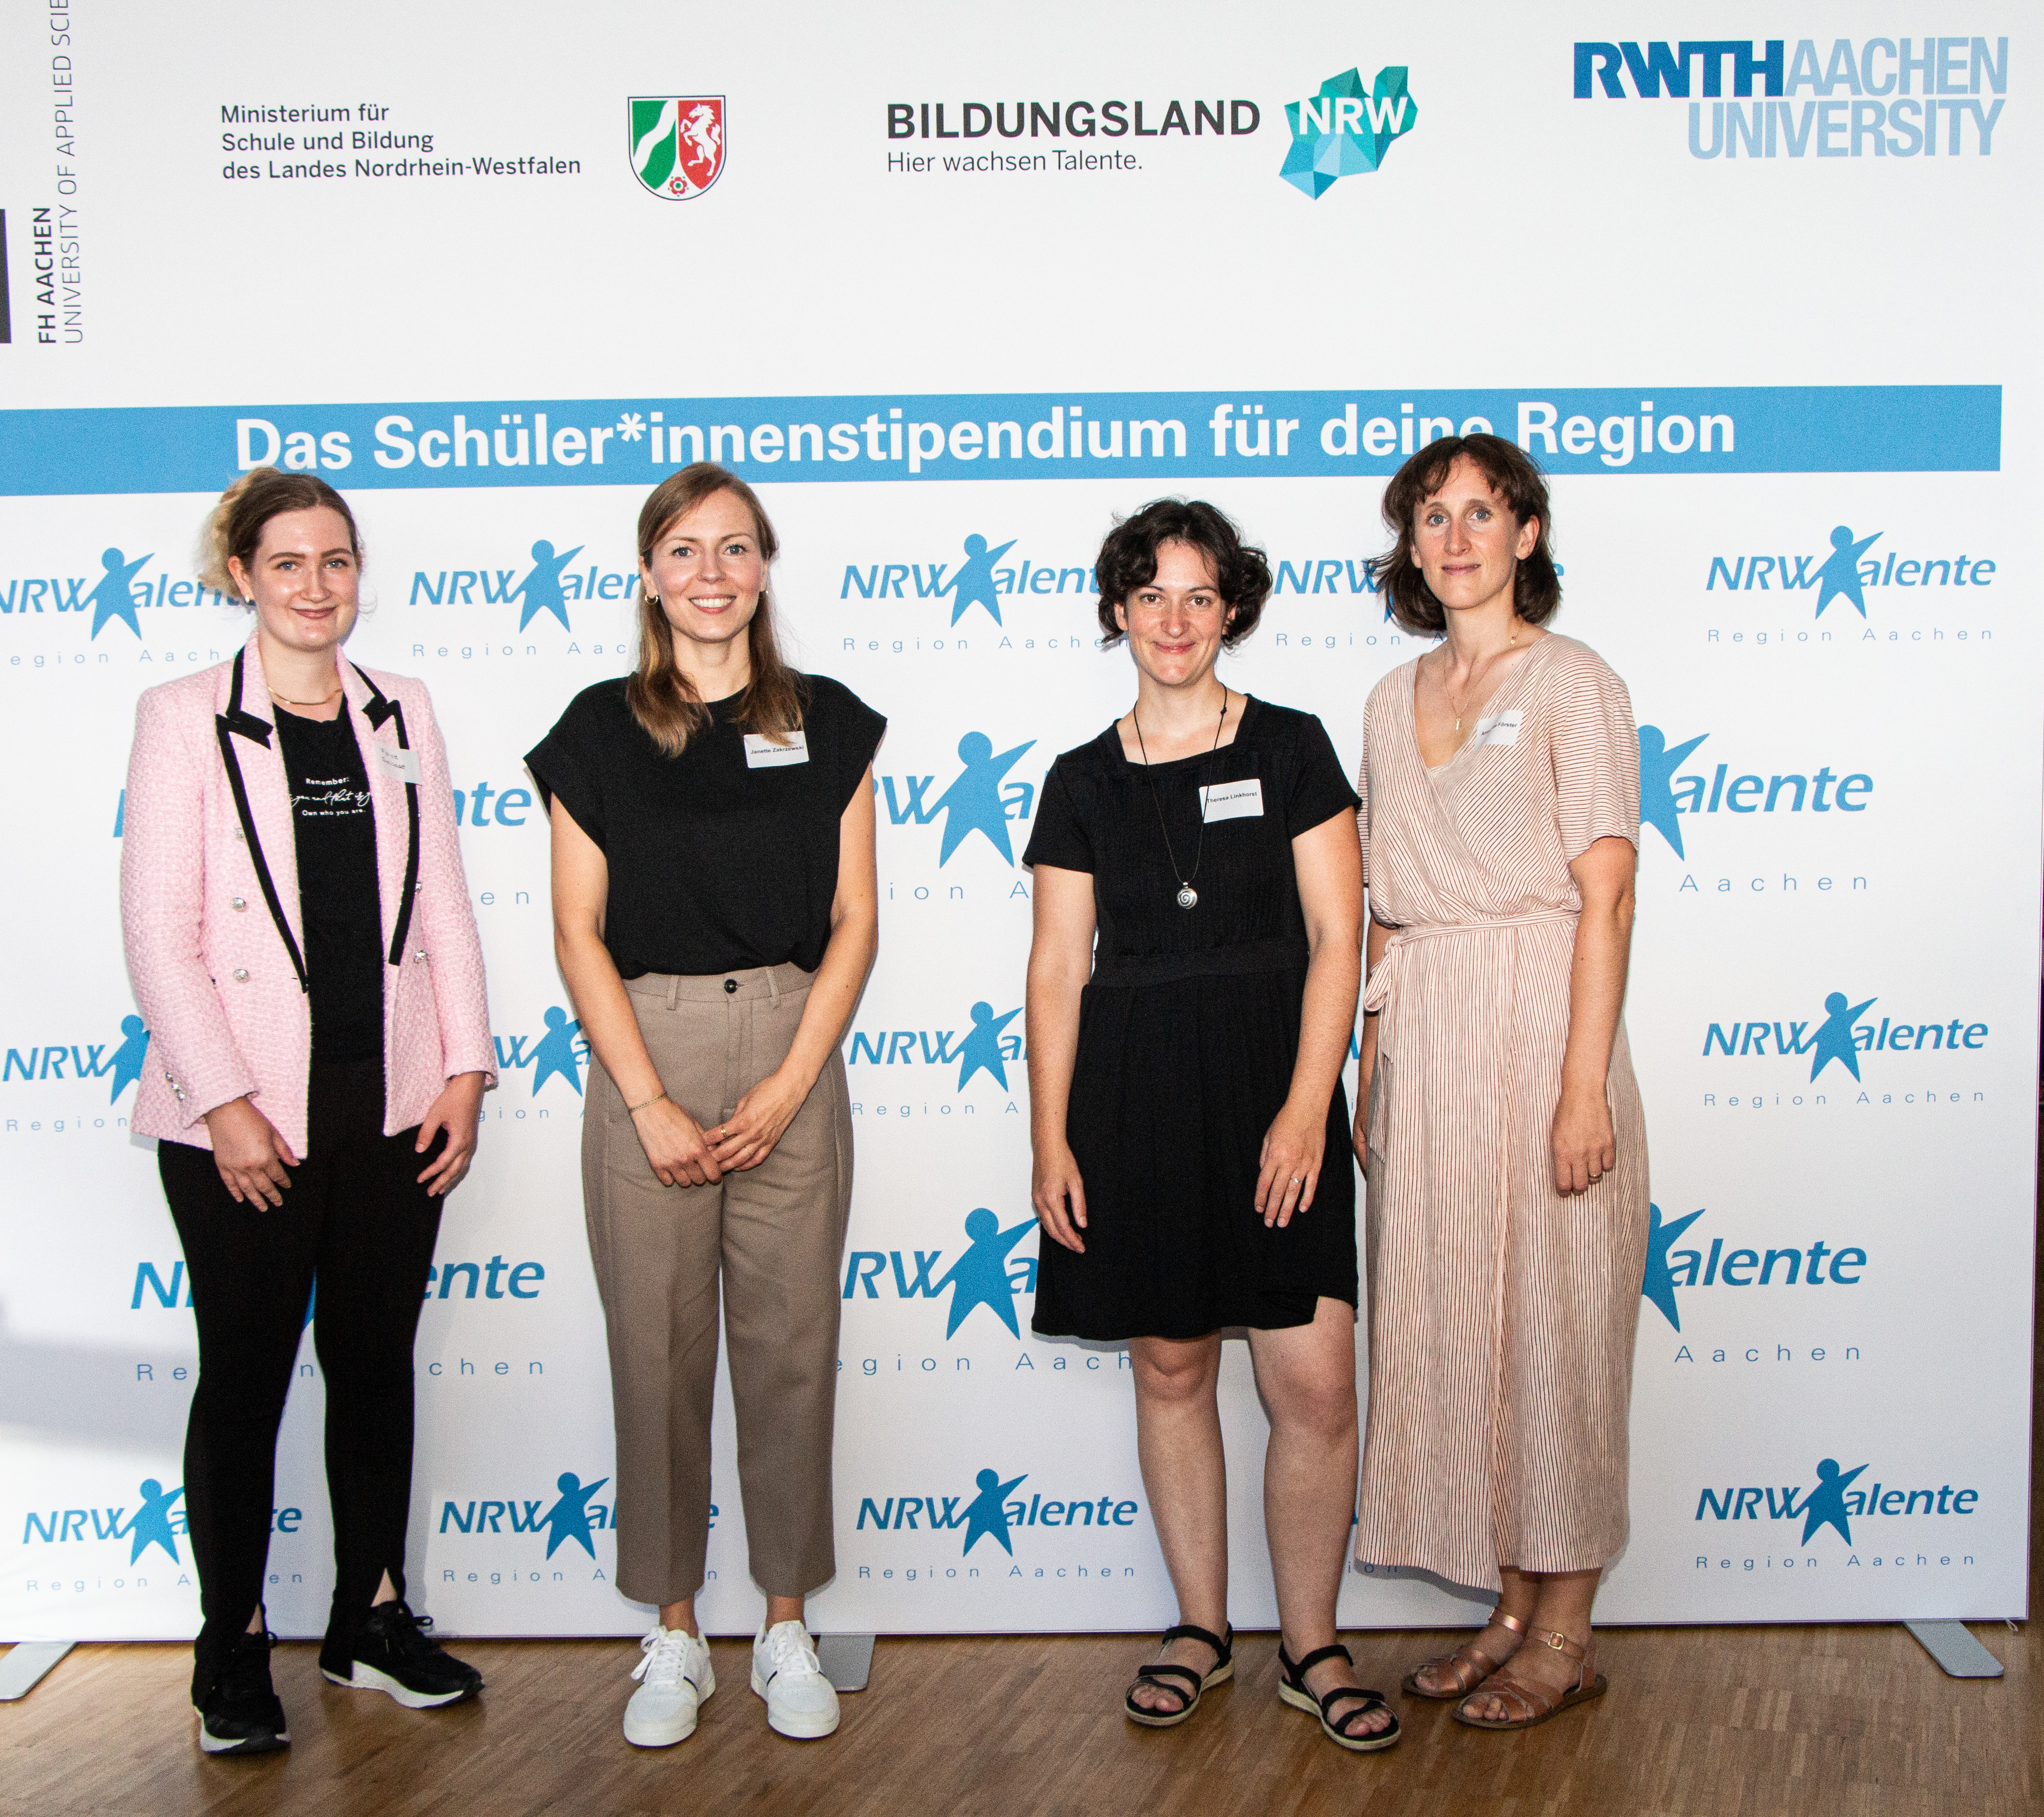 Faye Dollase, Janette Zakrzewski, Theresa Linkhorst und Anna-Rika Förster (v.l.n.r.). Foto: FH Aachen | Nina E. Schreyer